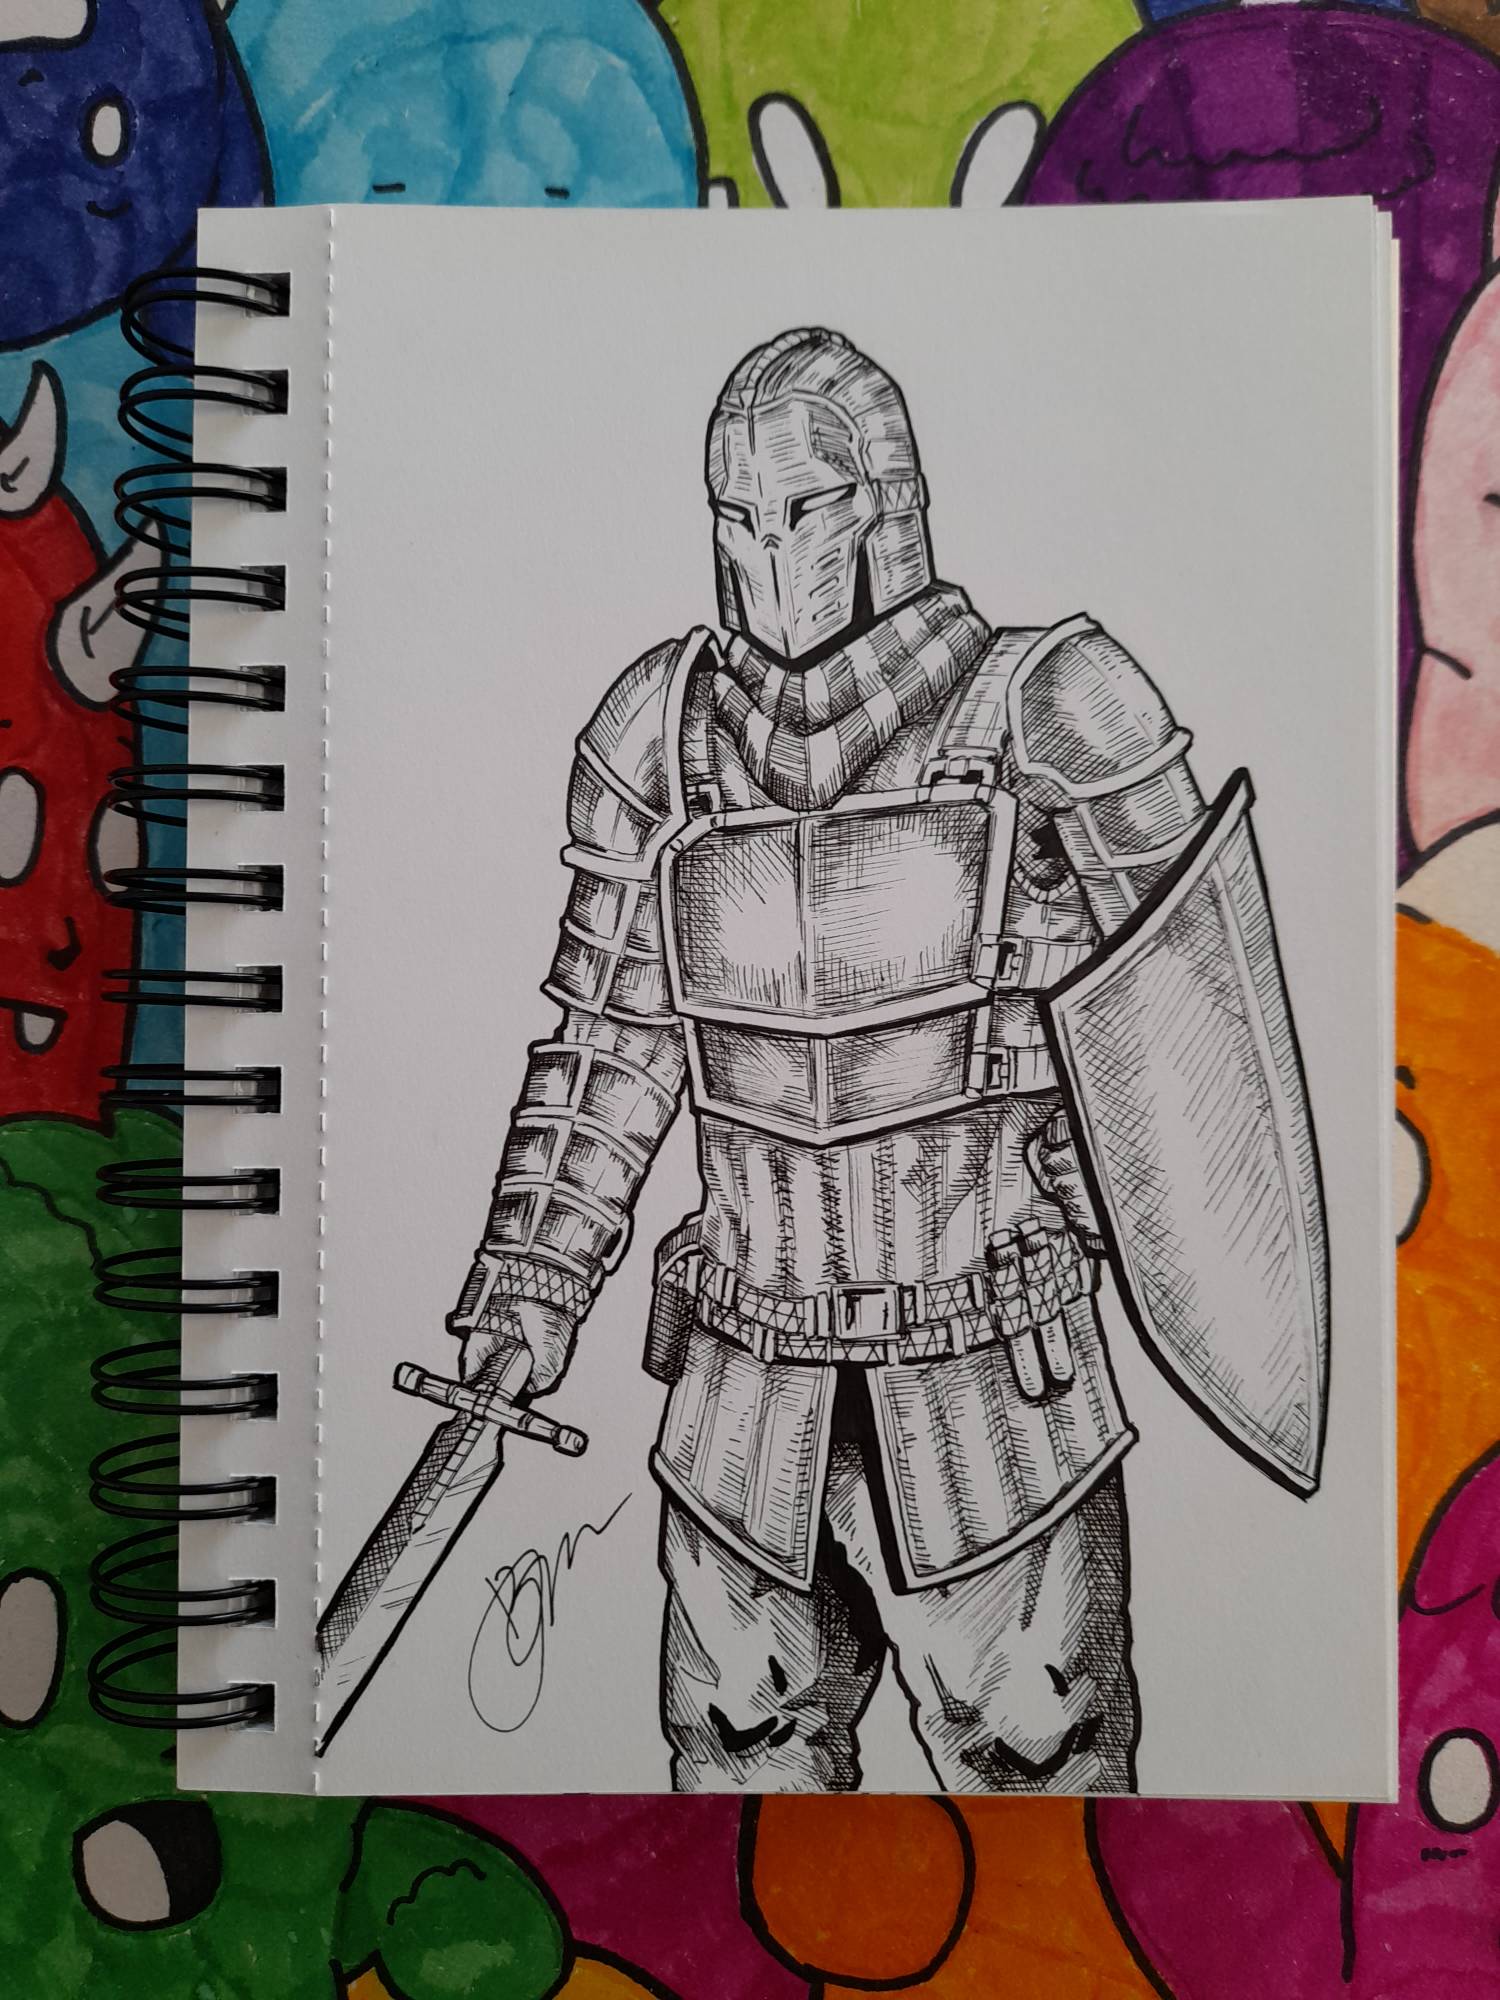 Heroic knight. by skilltwins on DeviantArt